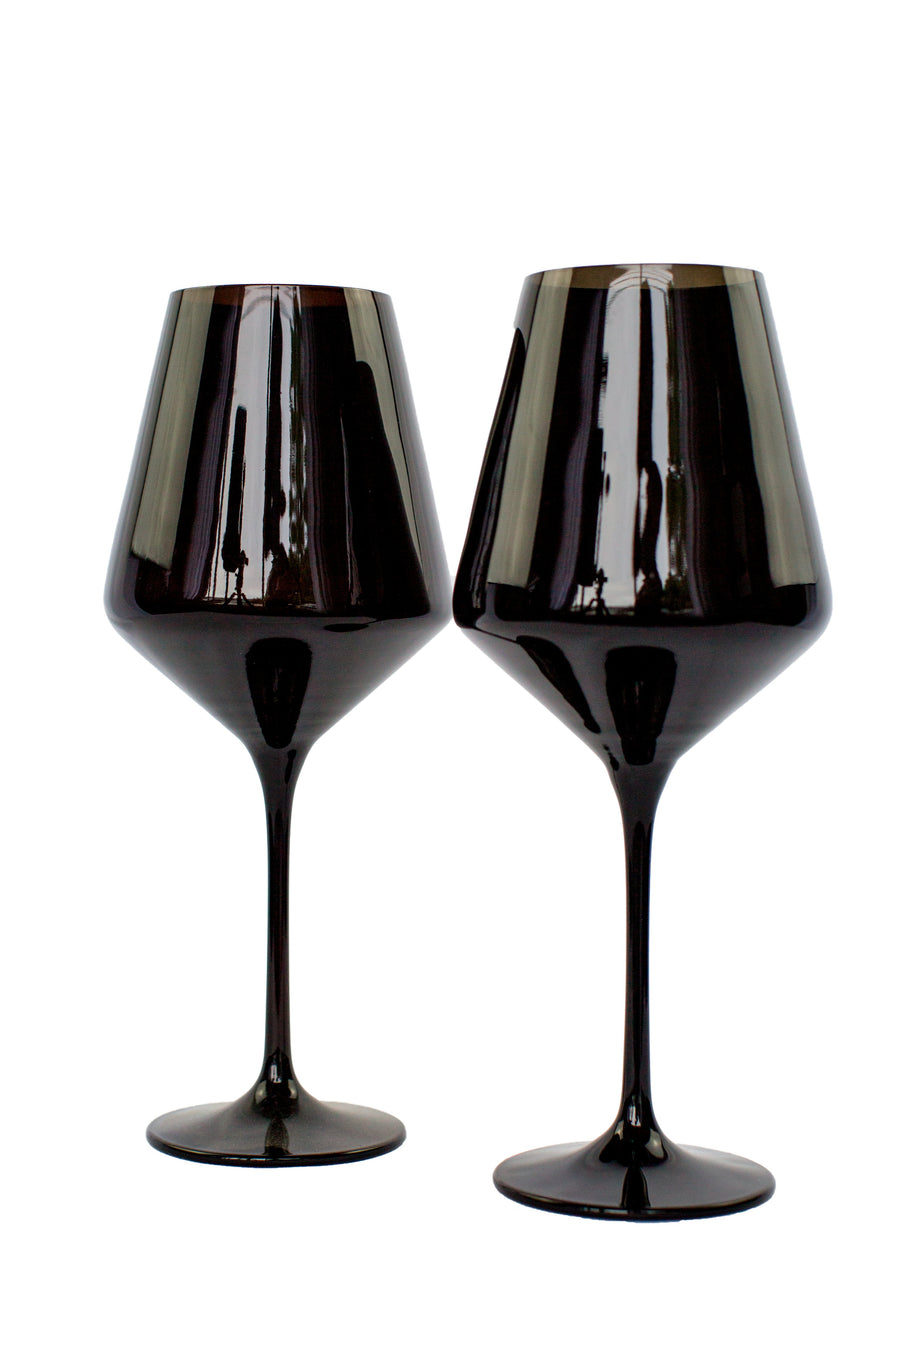 Stemware Wine Glasses - Set of 2